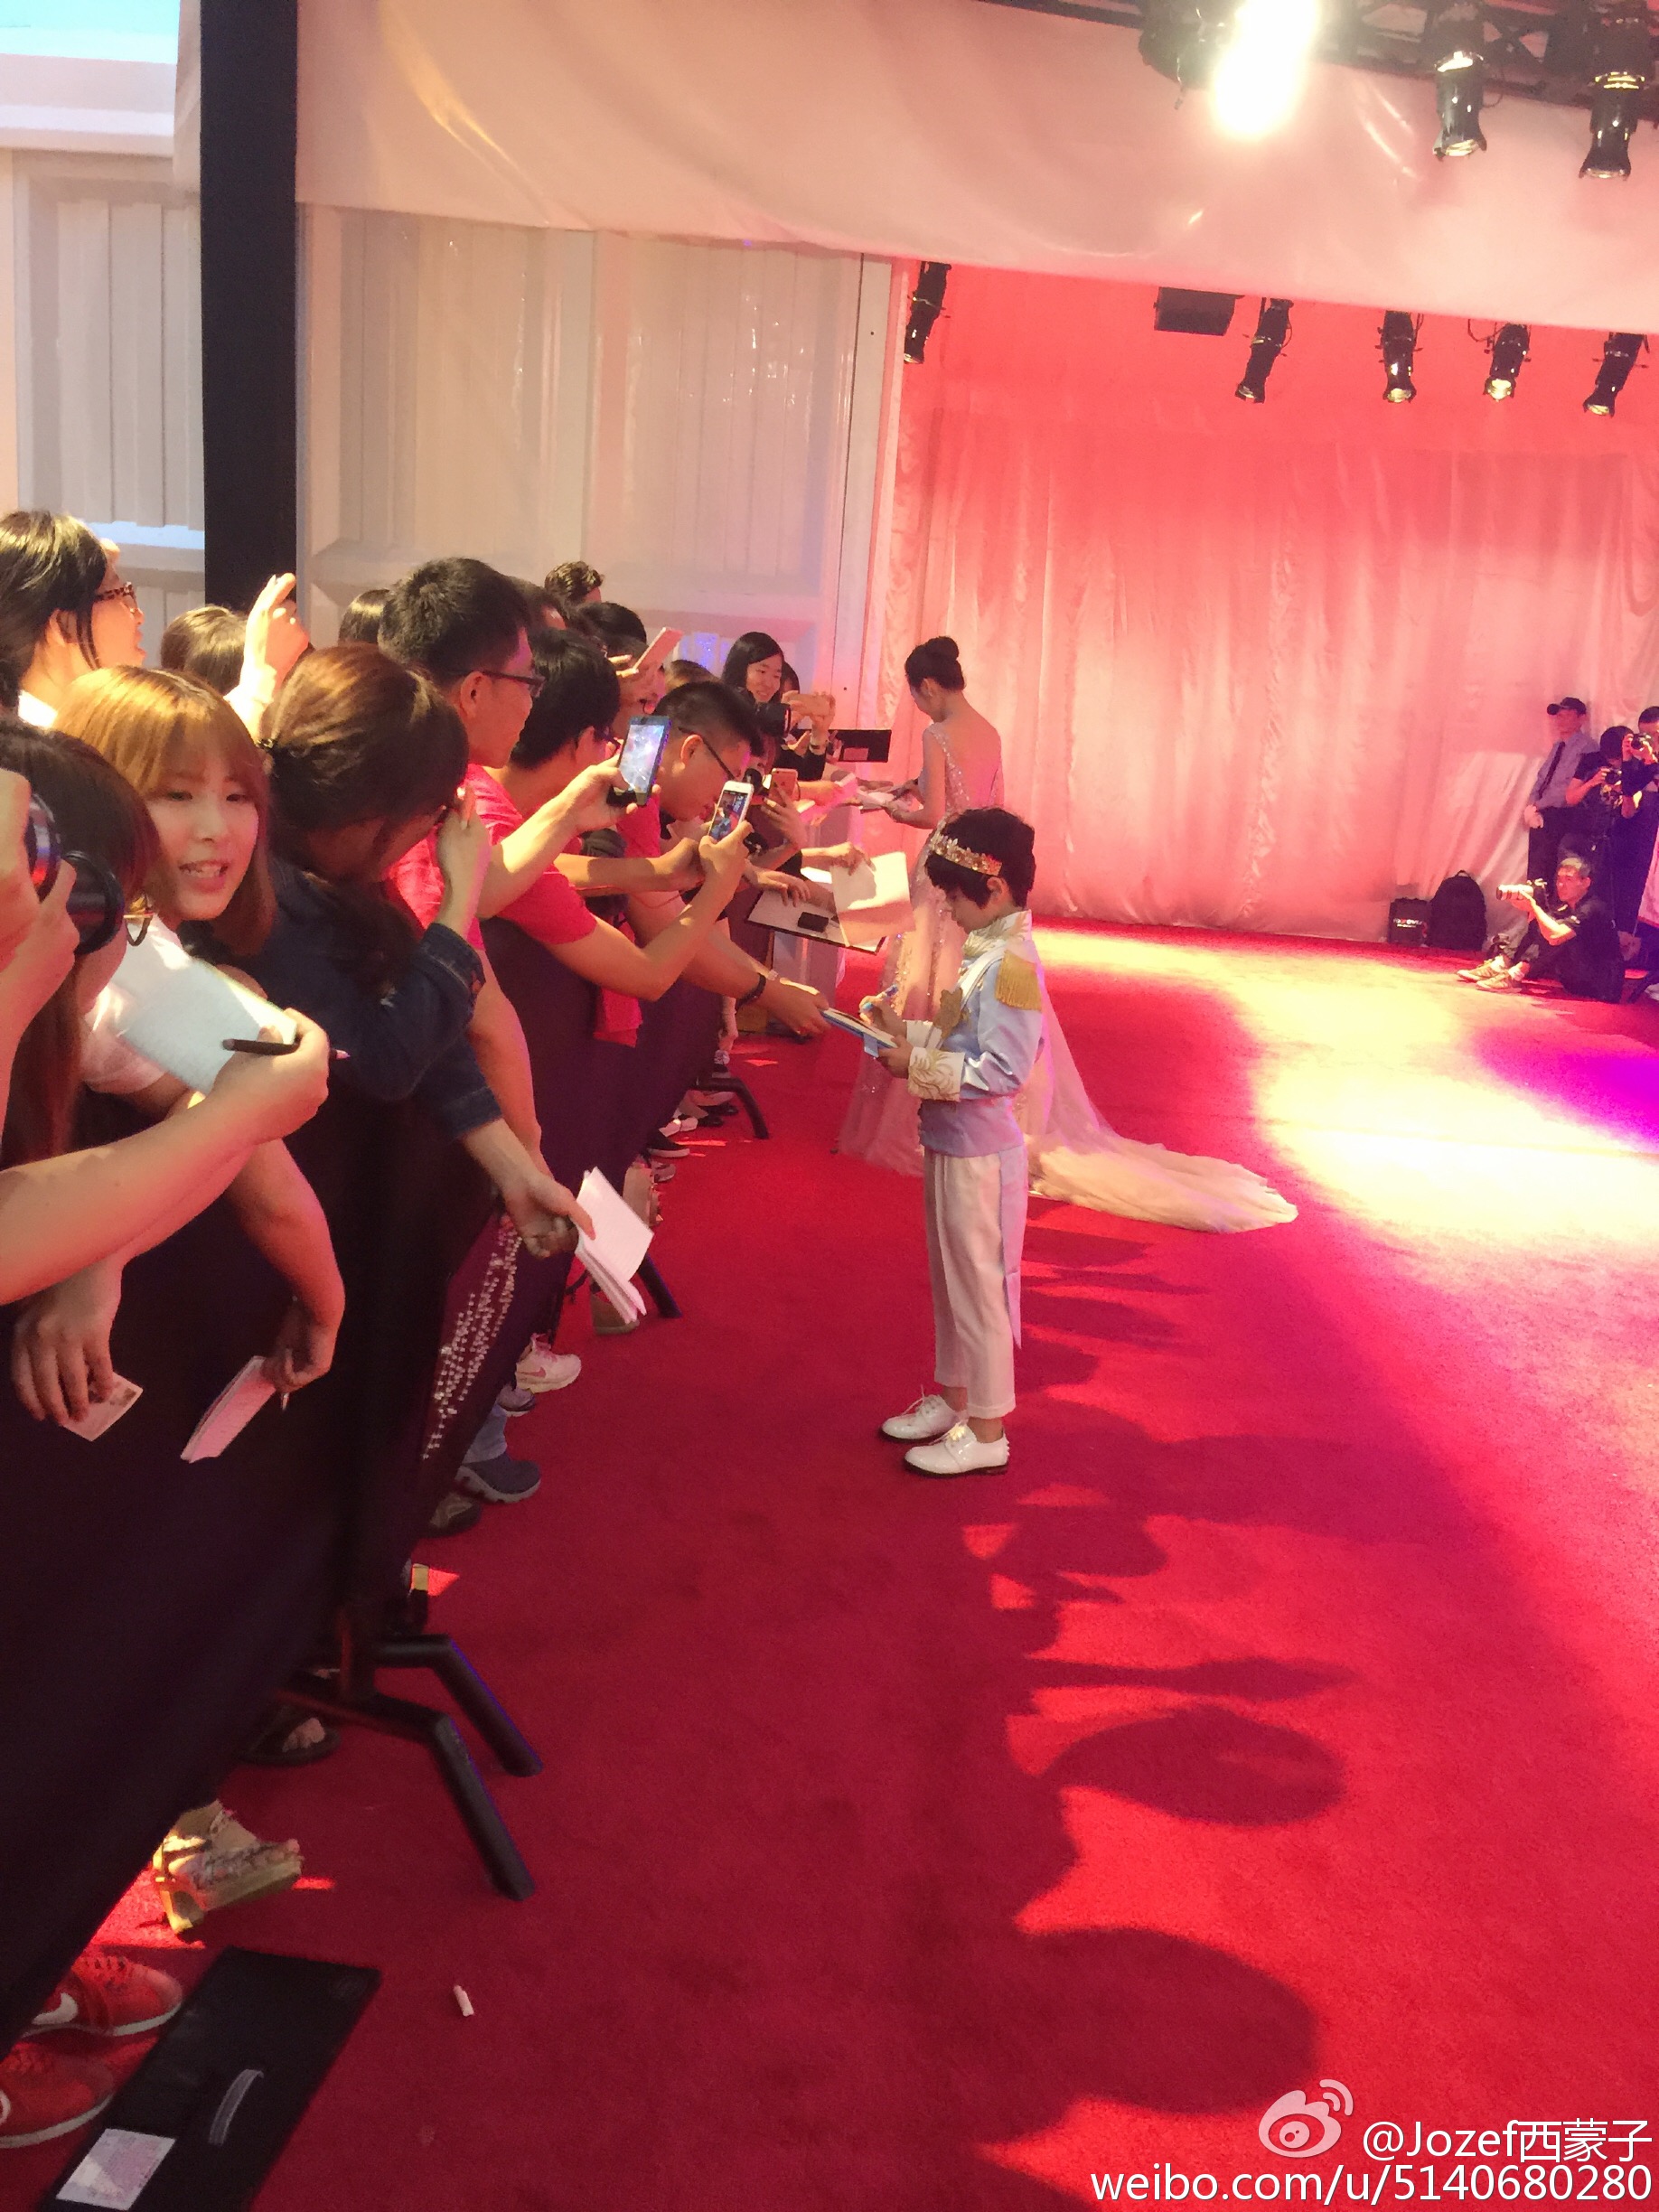 Jozef Waite (西蒙子) signing autographs at the Shanghai International Film Festival 2015 - Jackie Chan Action Movie Week Gala Night.